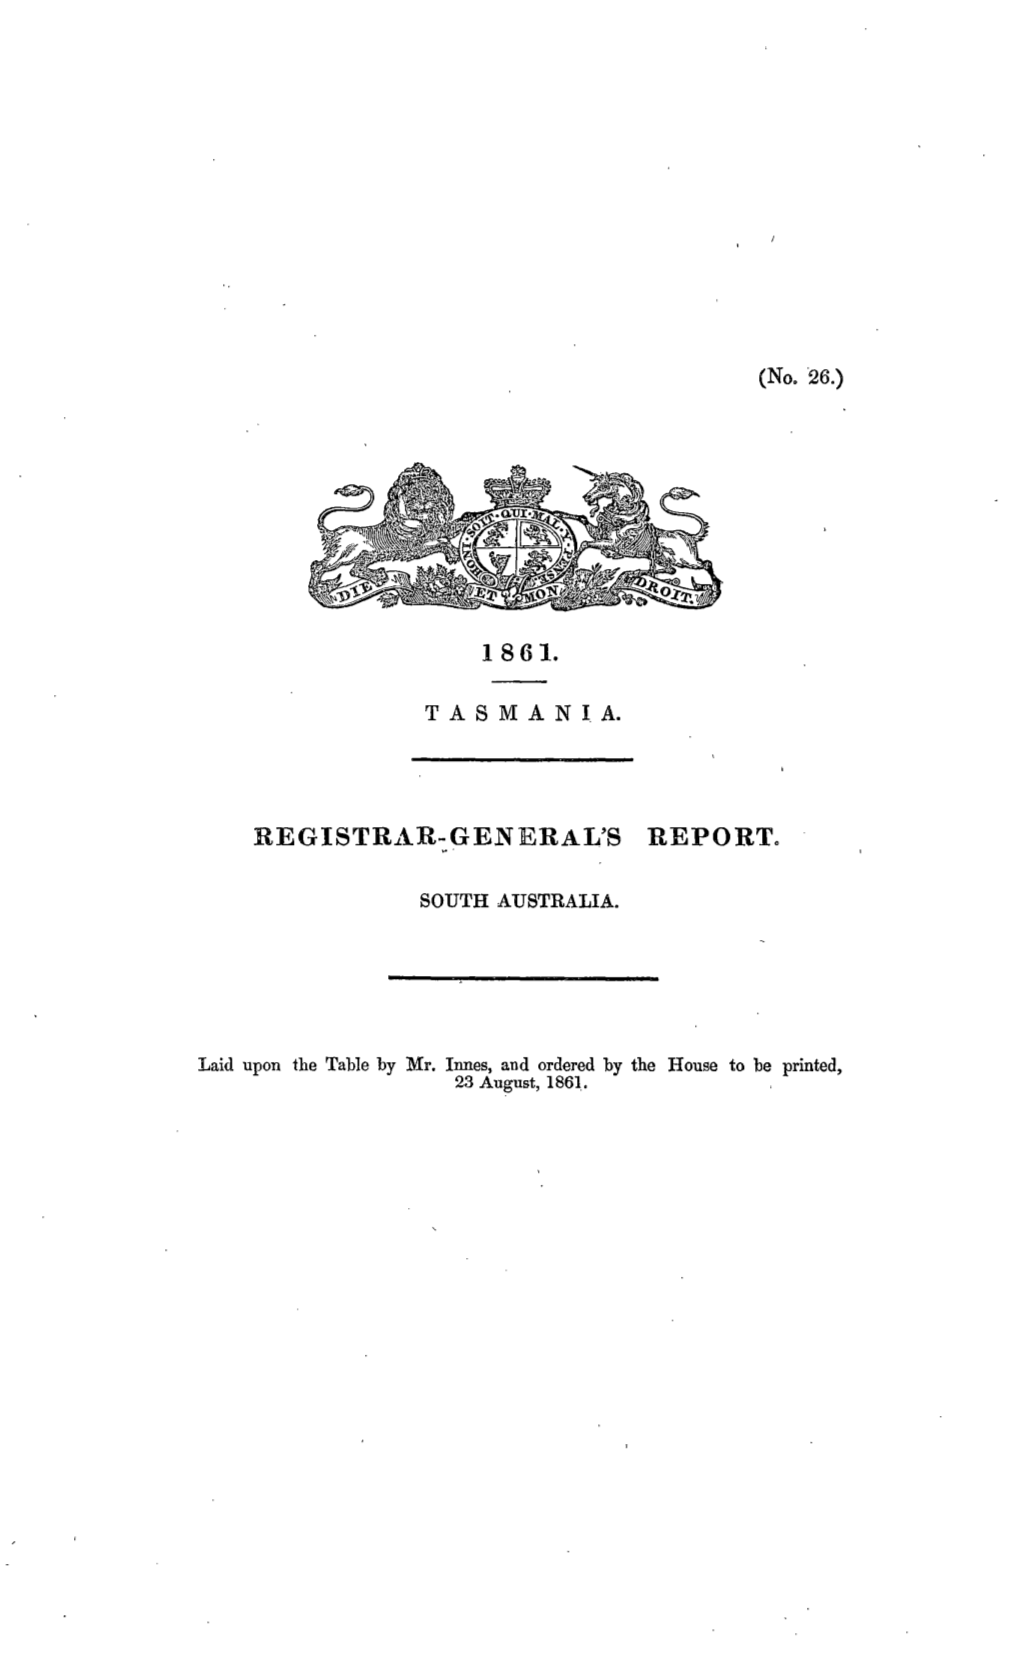 Registrar-General's Report South Australia